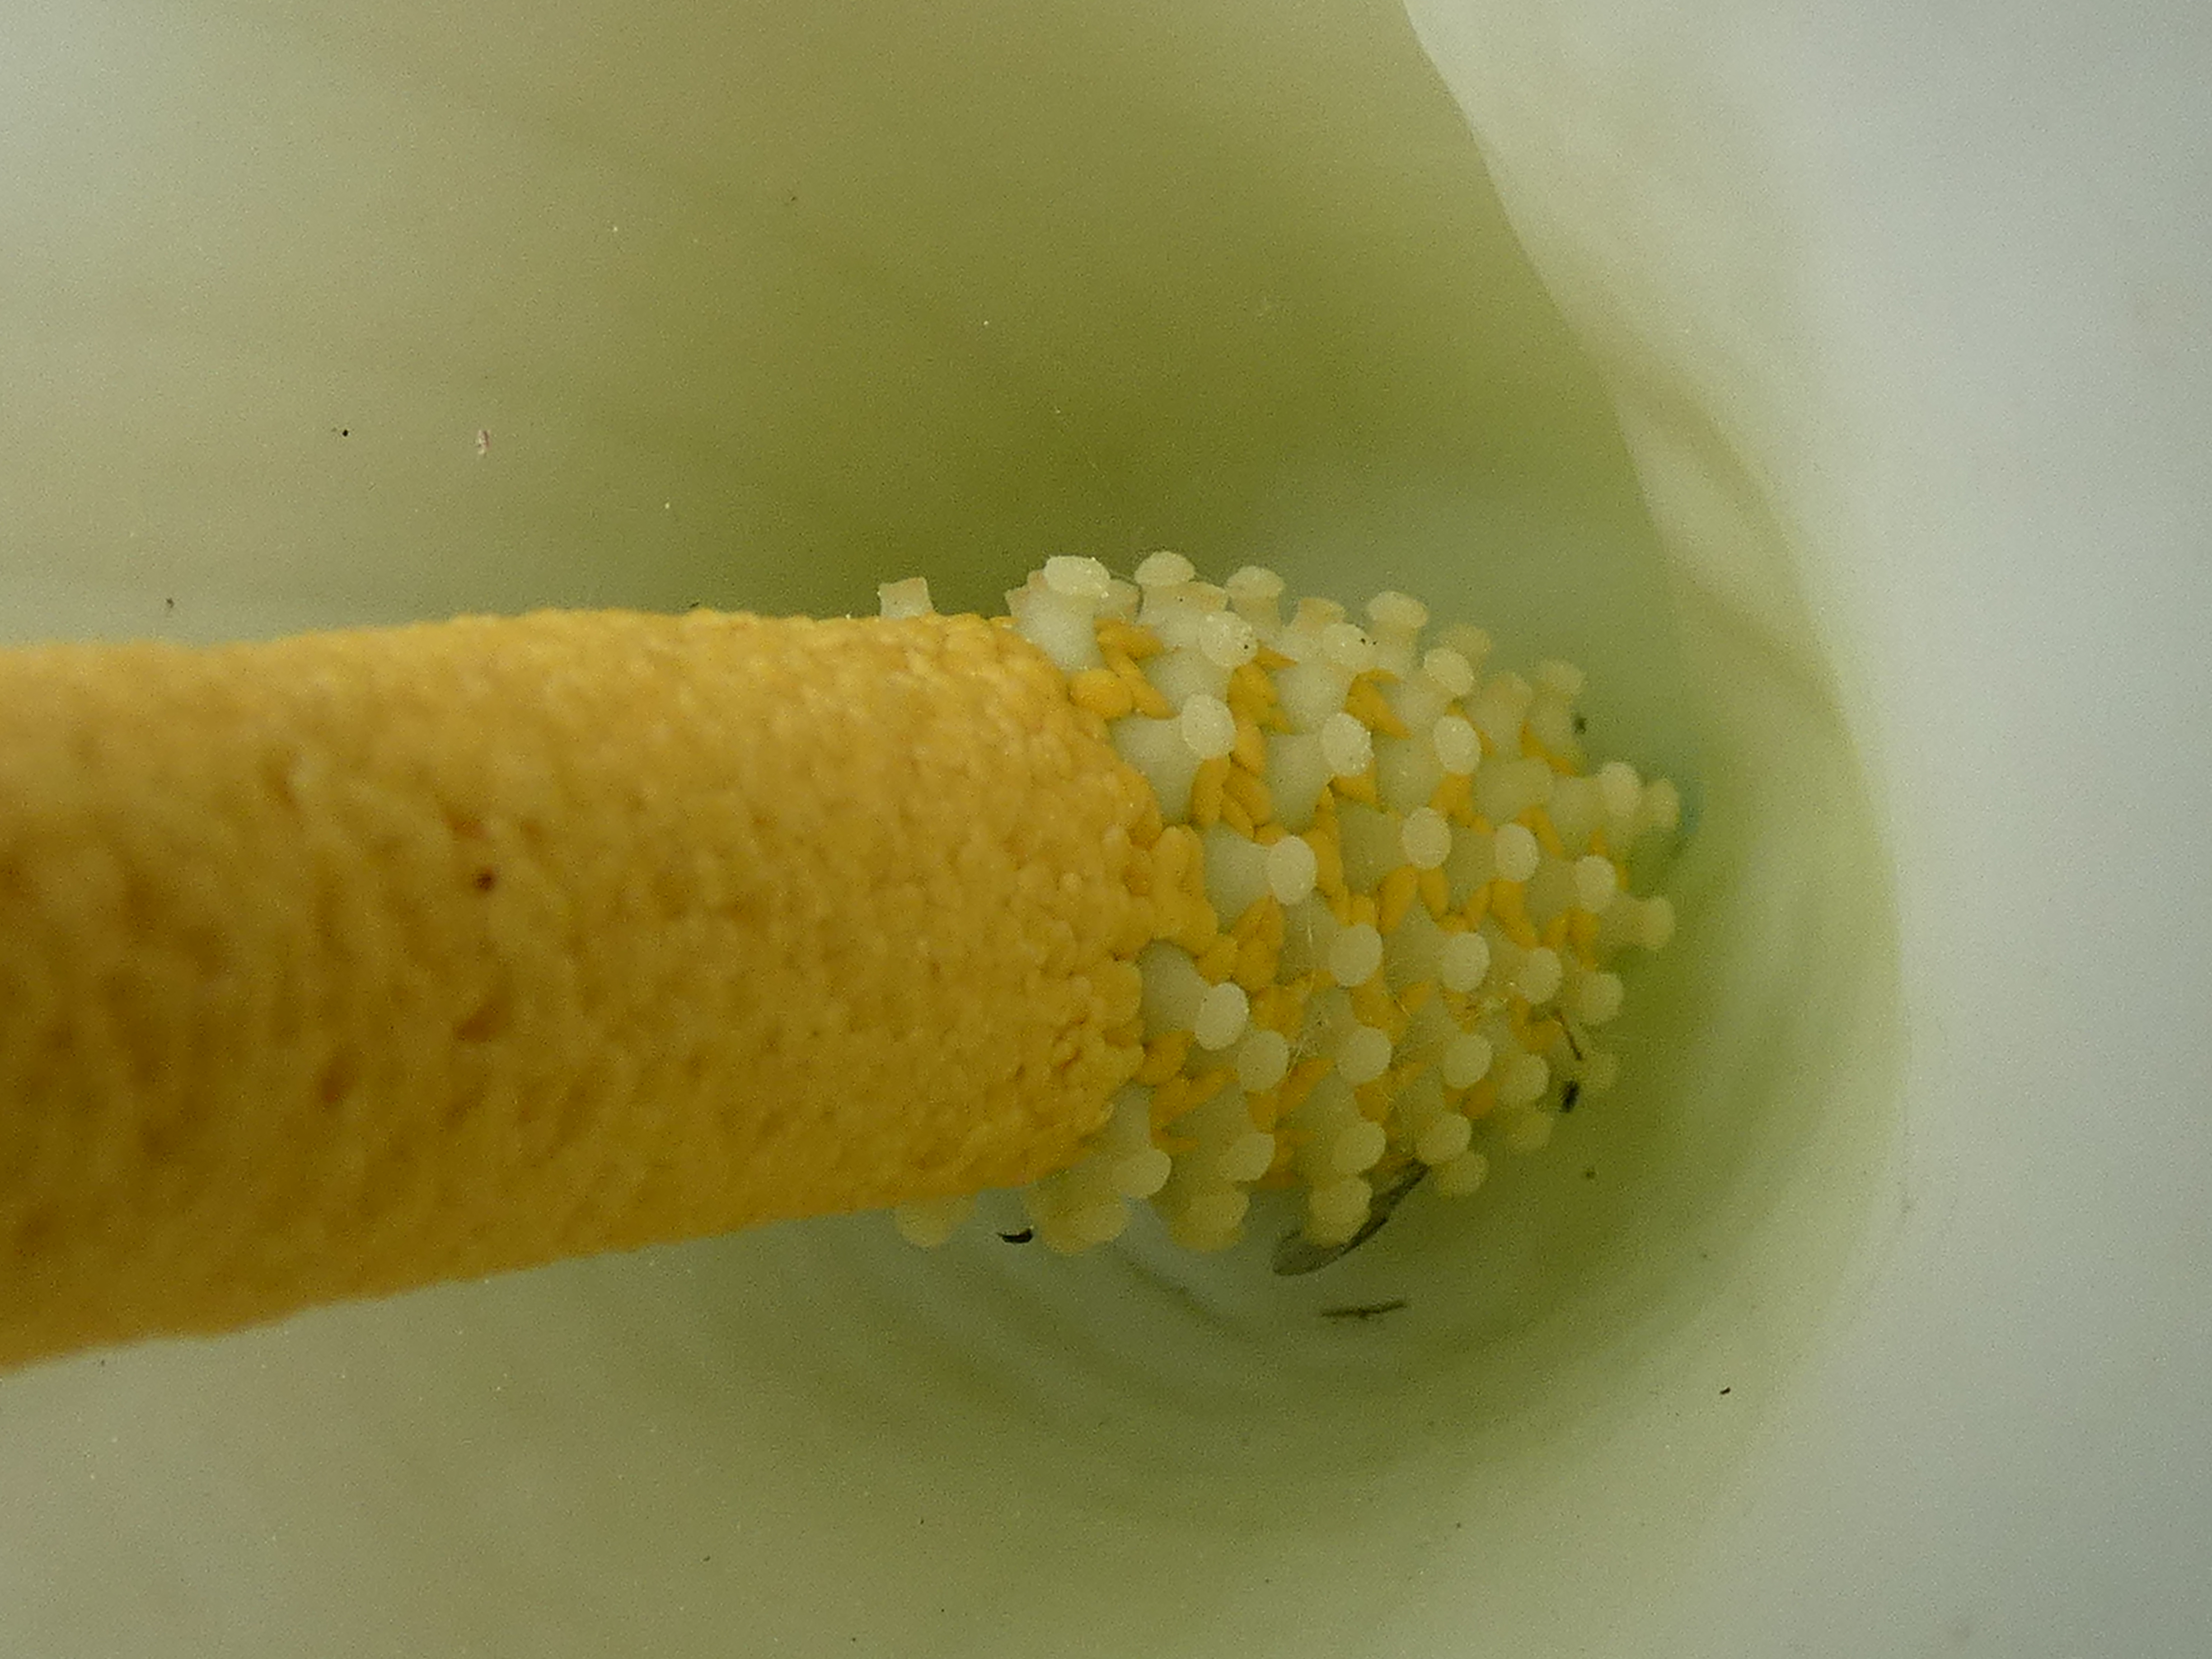 The base of a Calla lily spadix